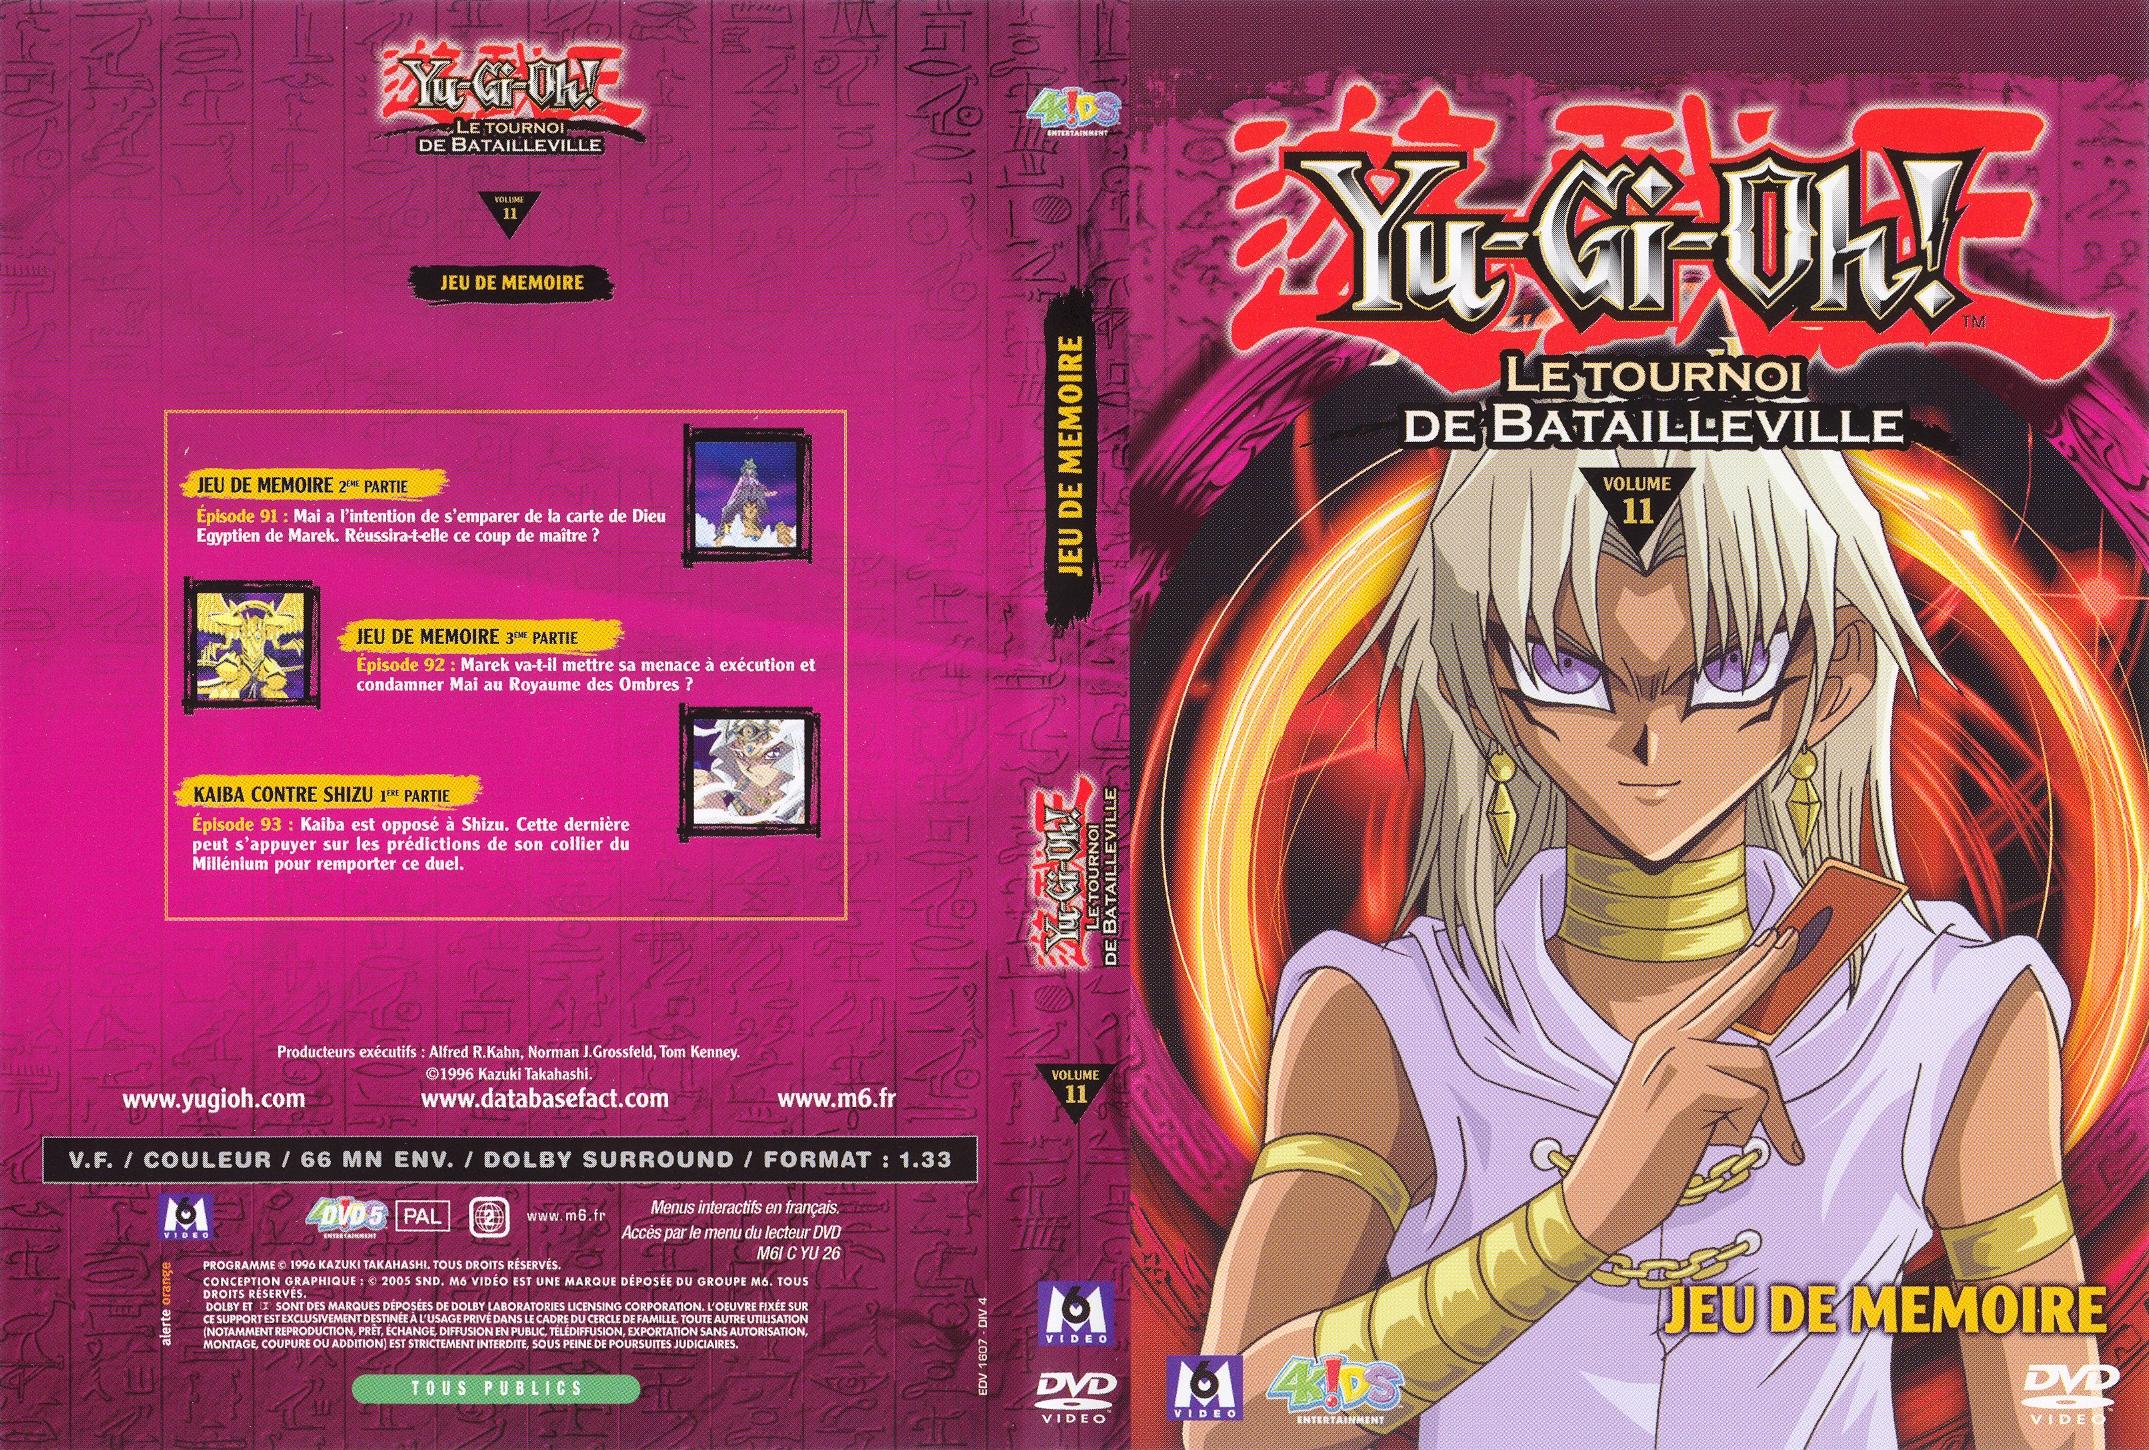 Jaquette DVD Yu-gi-oh! saison 2 vol 11